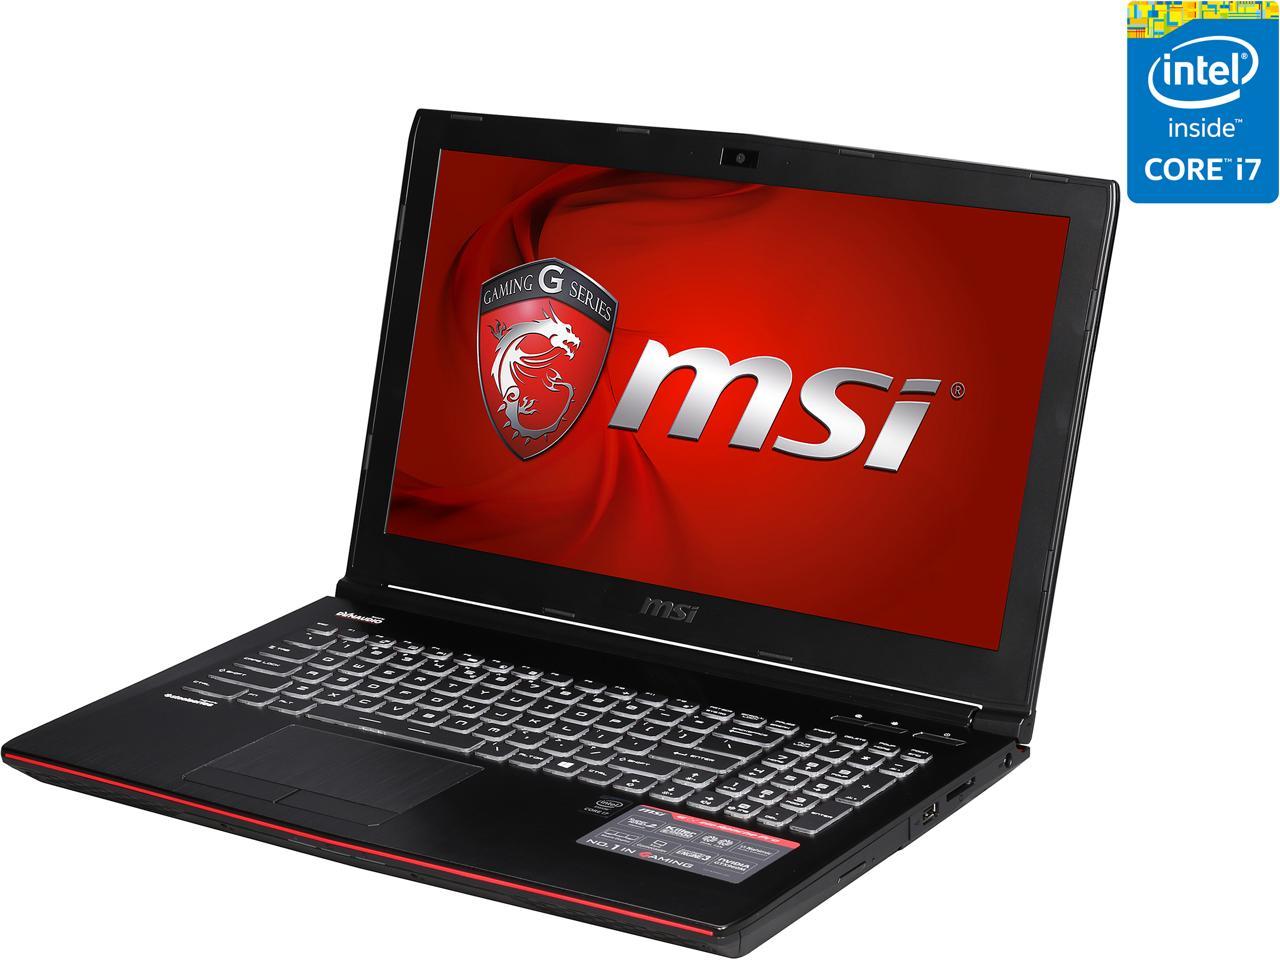 Msi Ge Series Ge62 Apache 276 Gaming Laptop 5th Generation Intel Core I7 5700hq 2 70 Ghz 12 Gb Memory 1 Tb Hdd Nvidia Geforce Gtx 960m 2 Gb Gddr5 15 6 Windows 10 Home Newegg Com